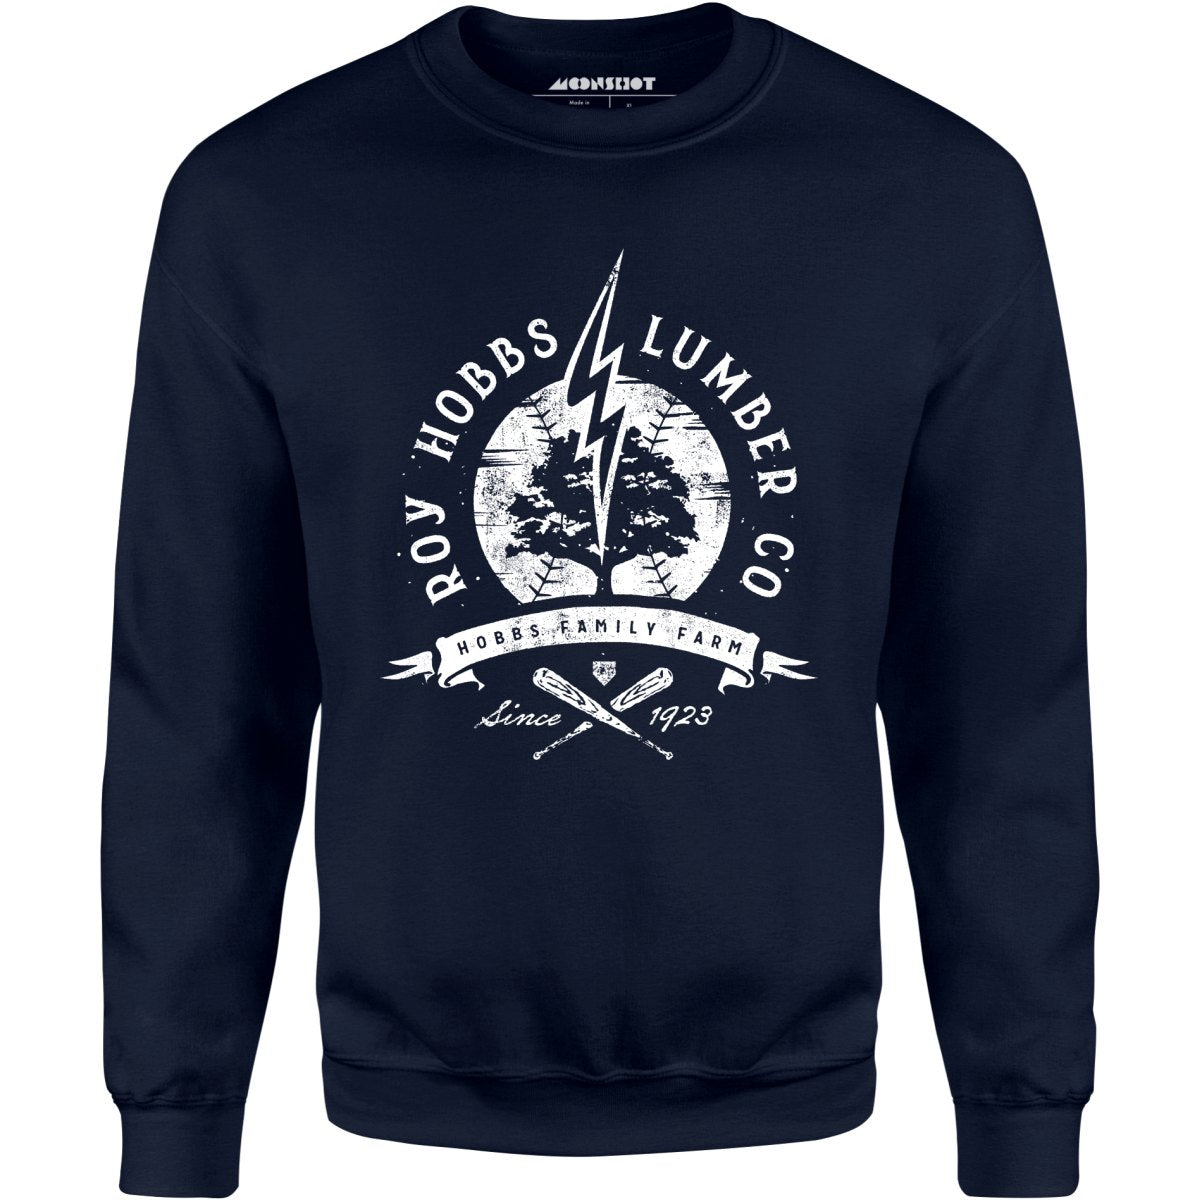 Roy Hobbs Lumber Company - Unisex Sweatshirt